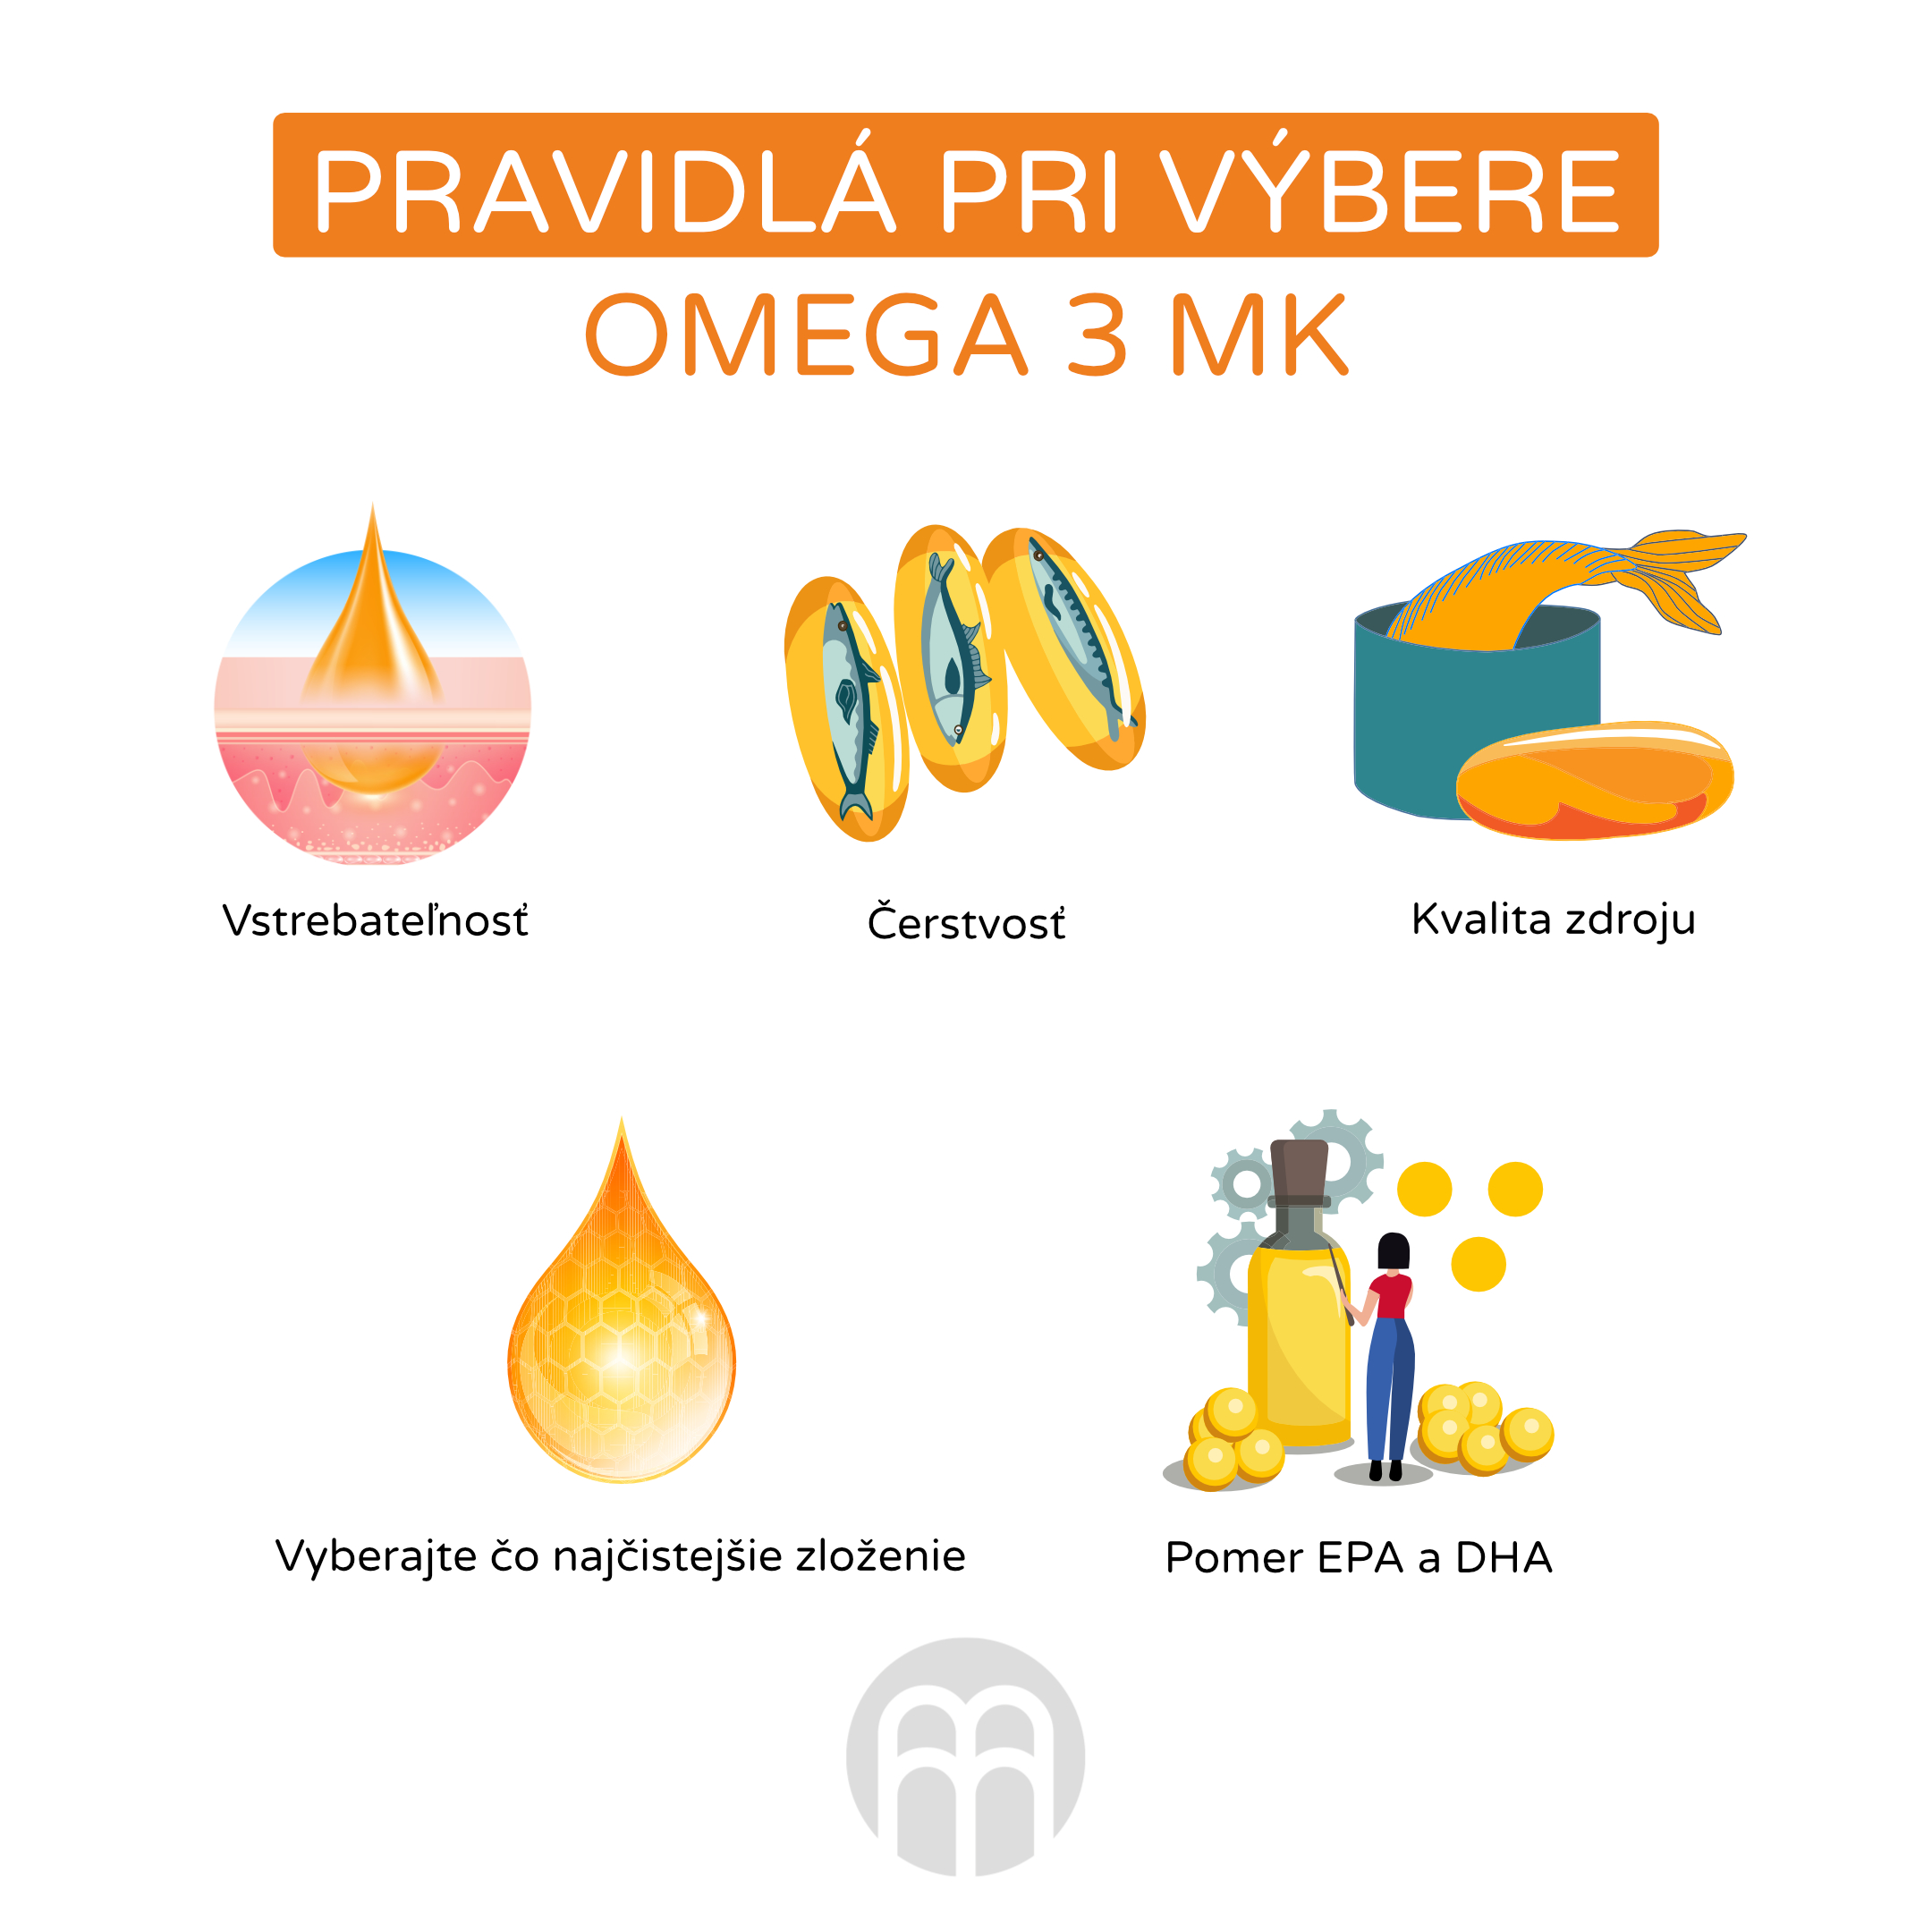 pravidla pri vyberu omega 3MK_infografika_cz